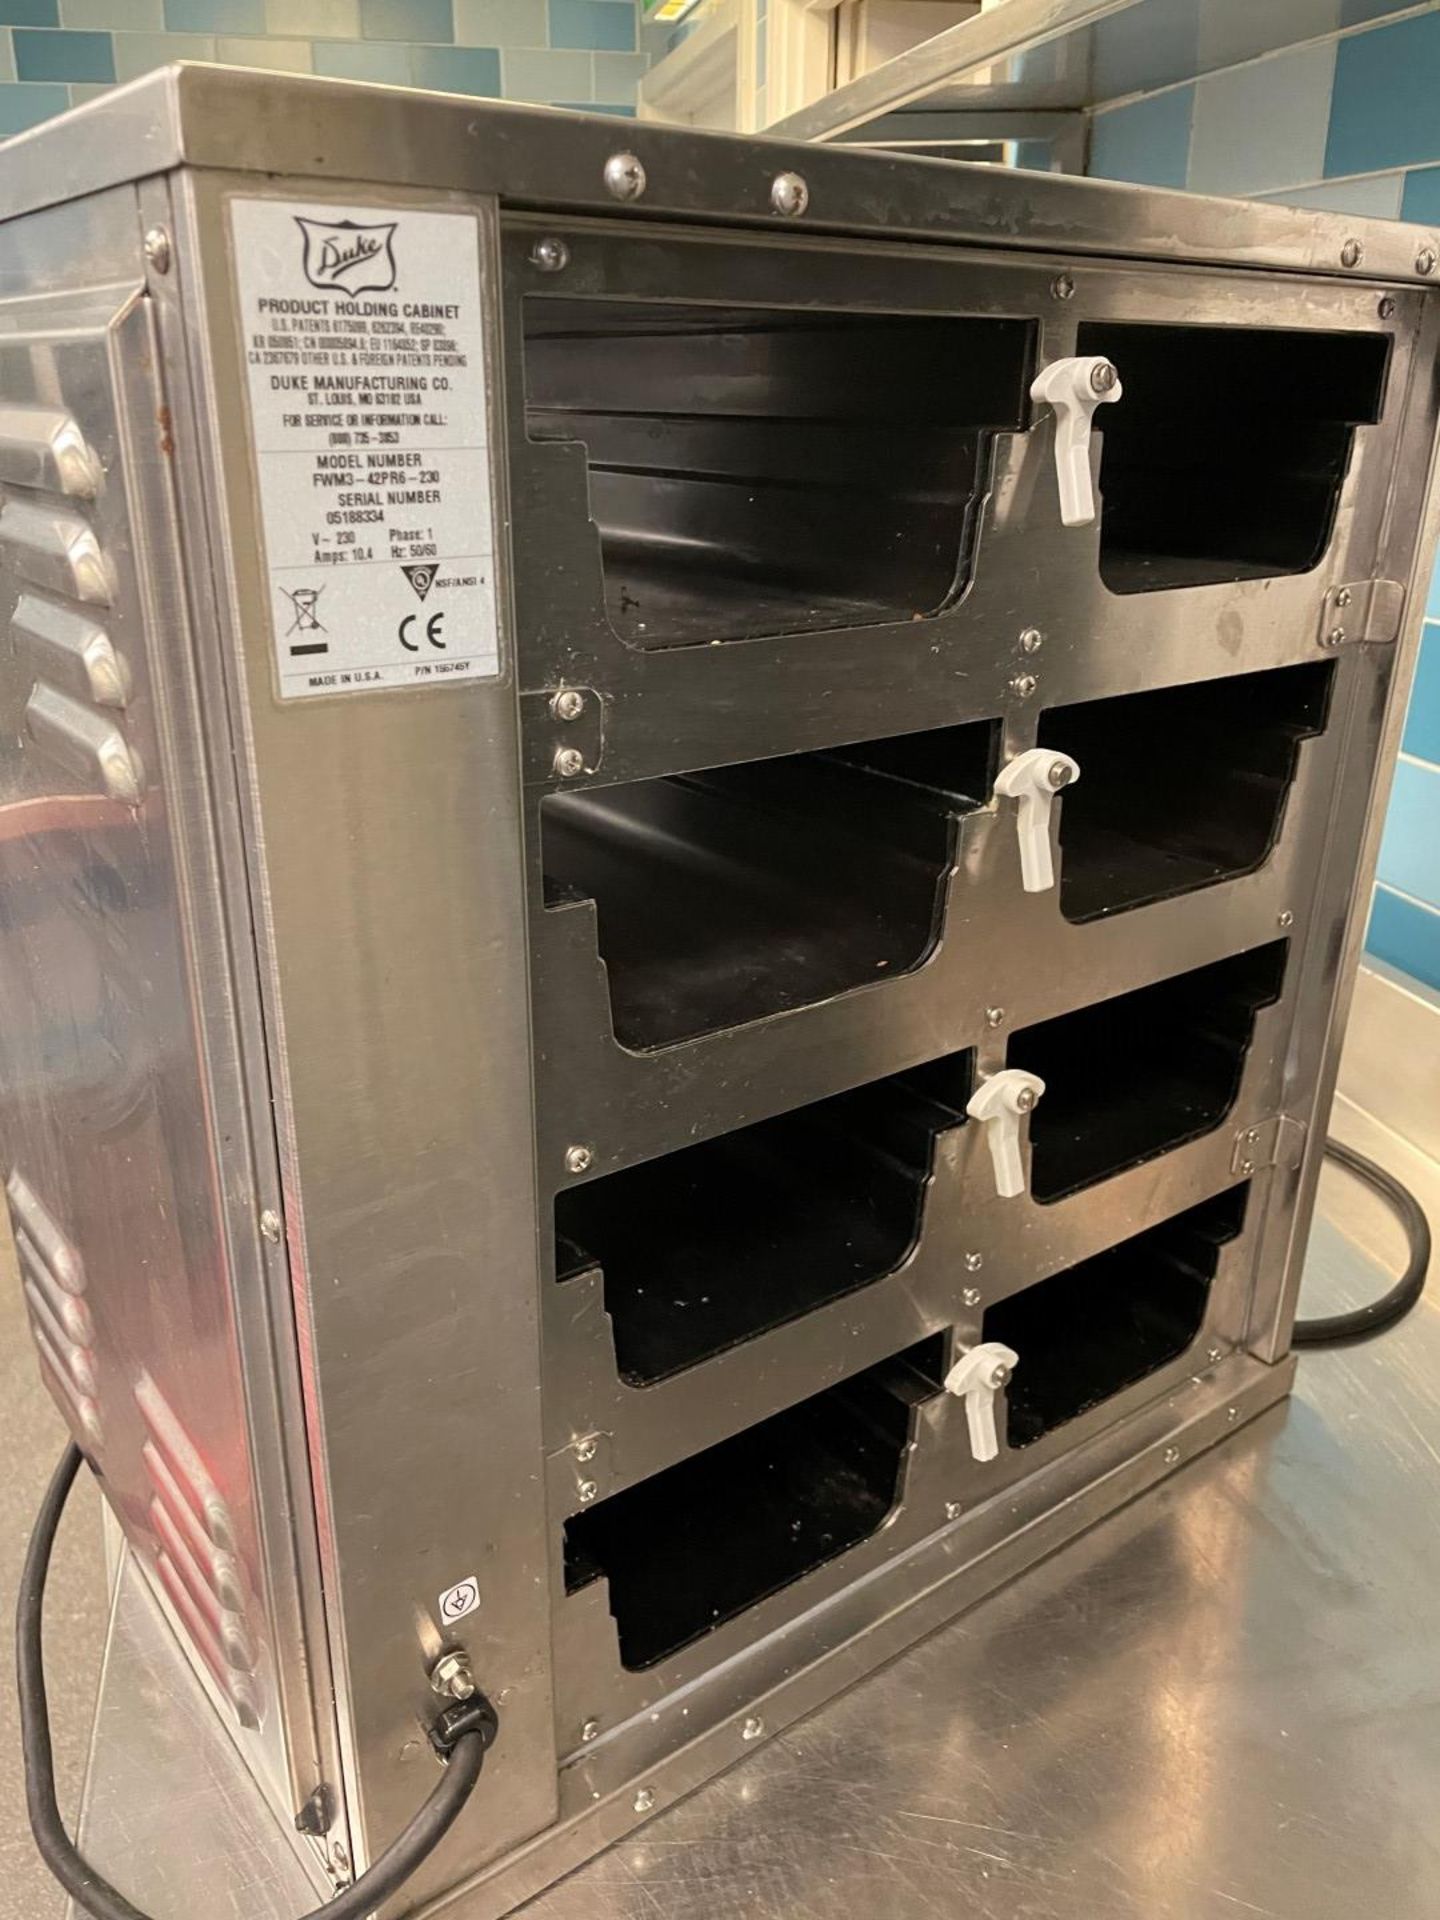 1 x Duke FWM Food Warming Holding Cabinet With HeatSinnk Technology - Model FWM3-42PR6-230 - Image 6 of 11